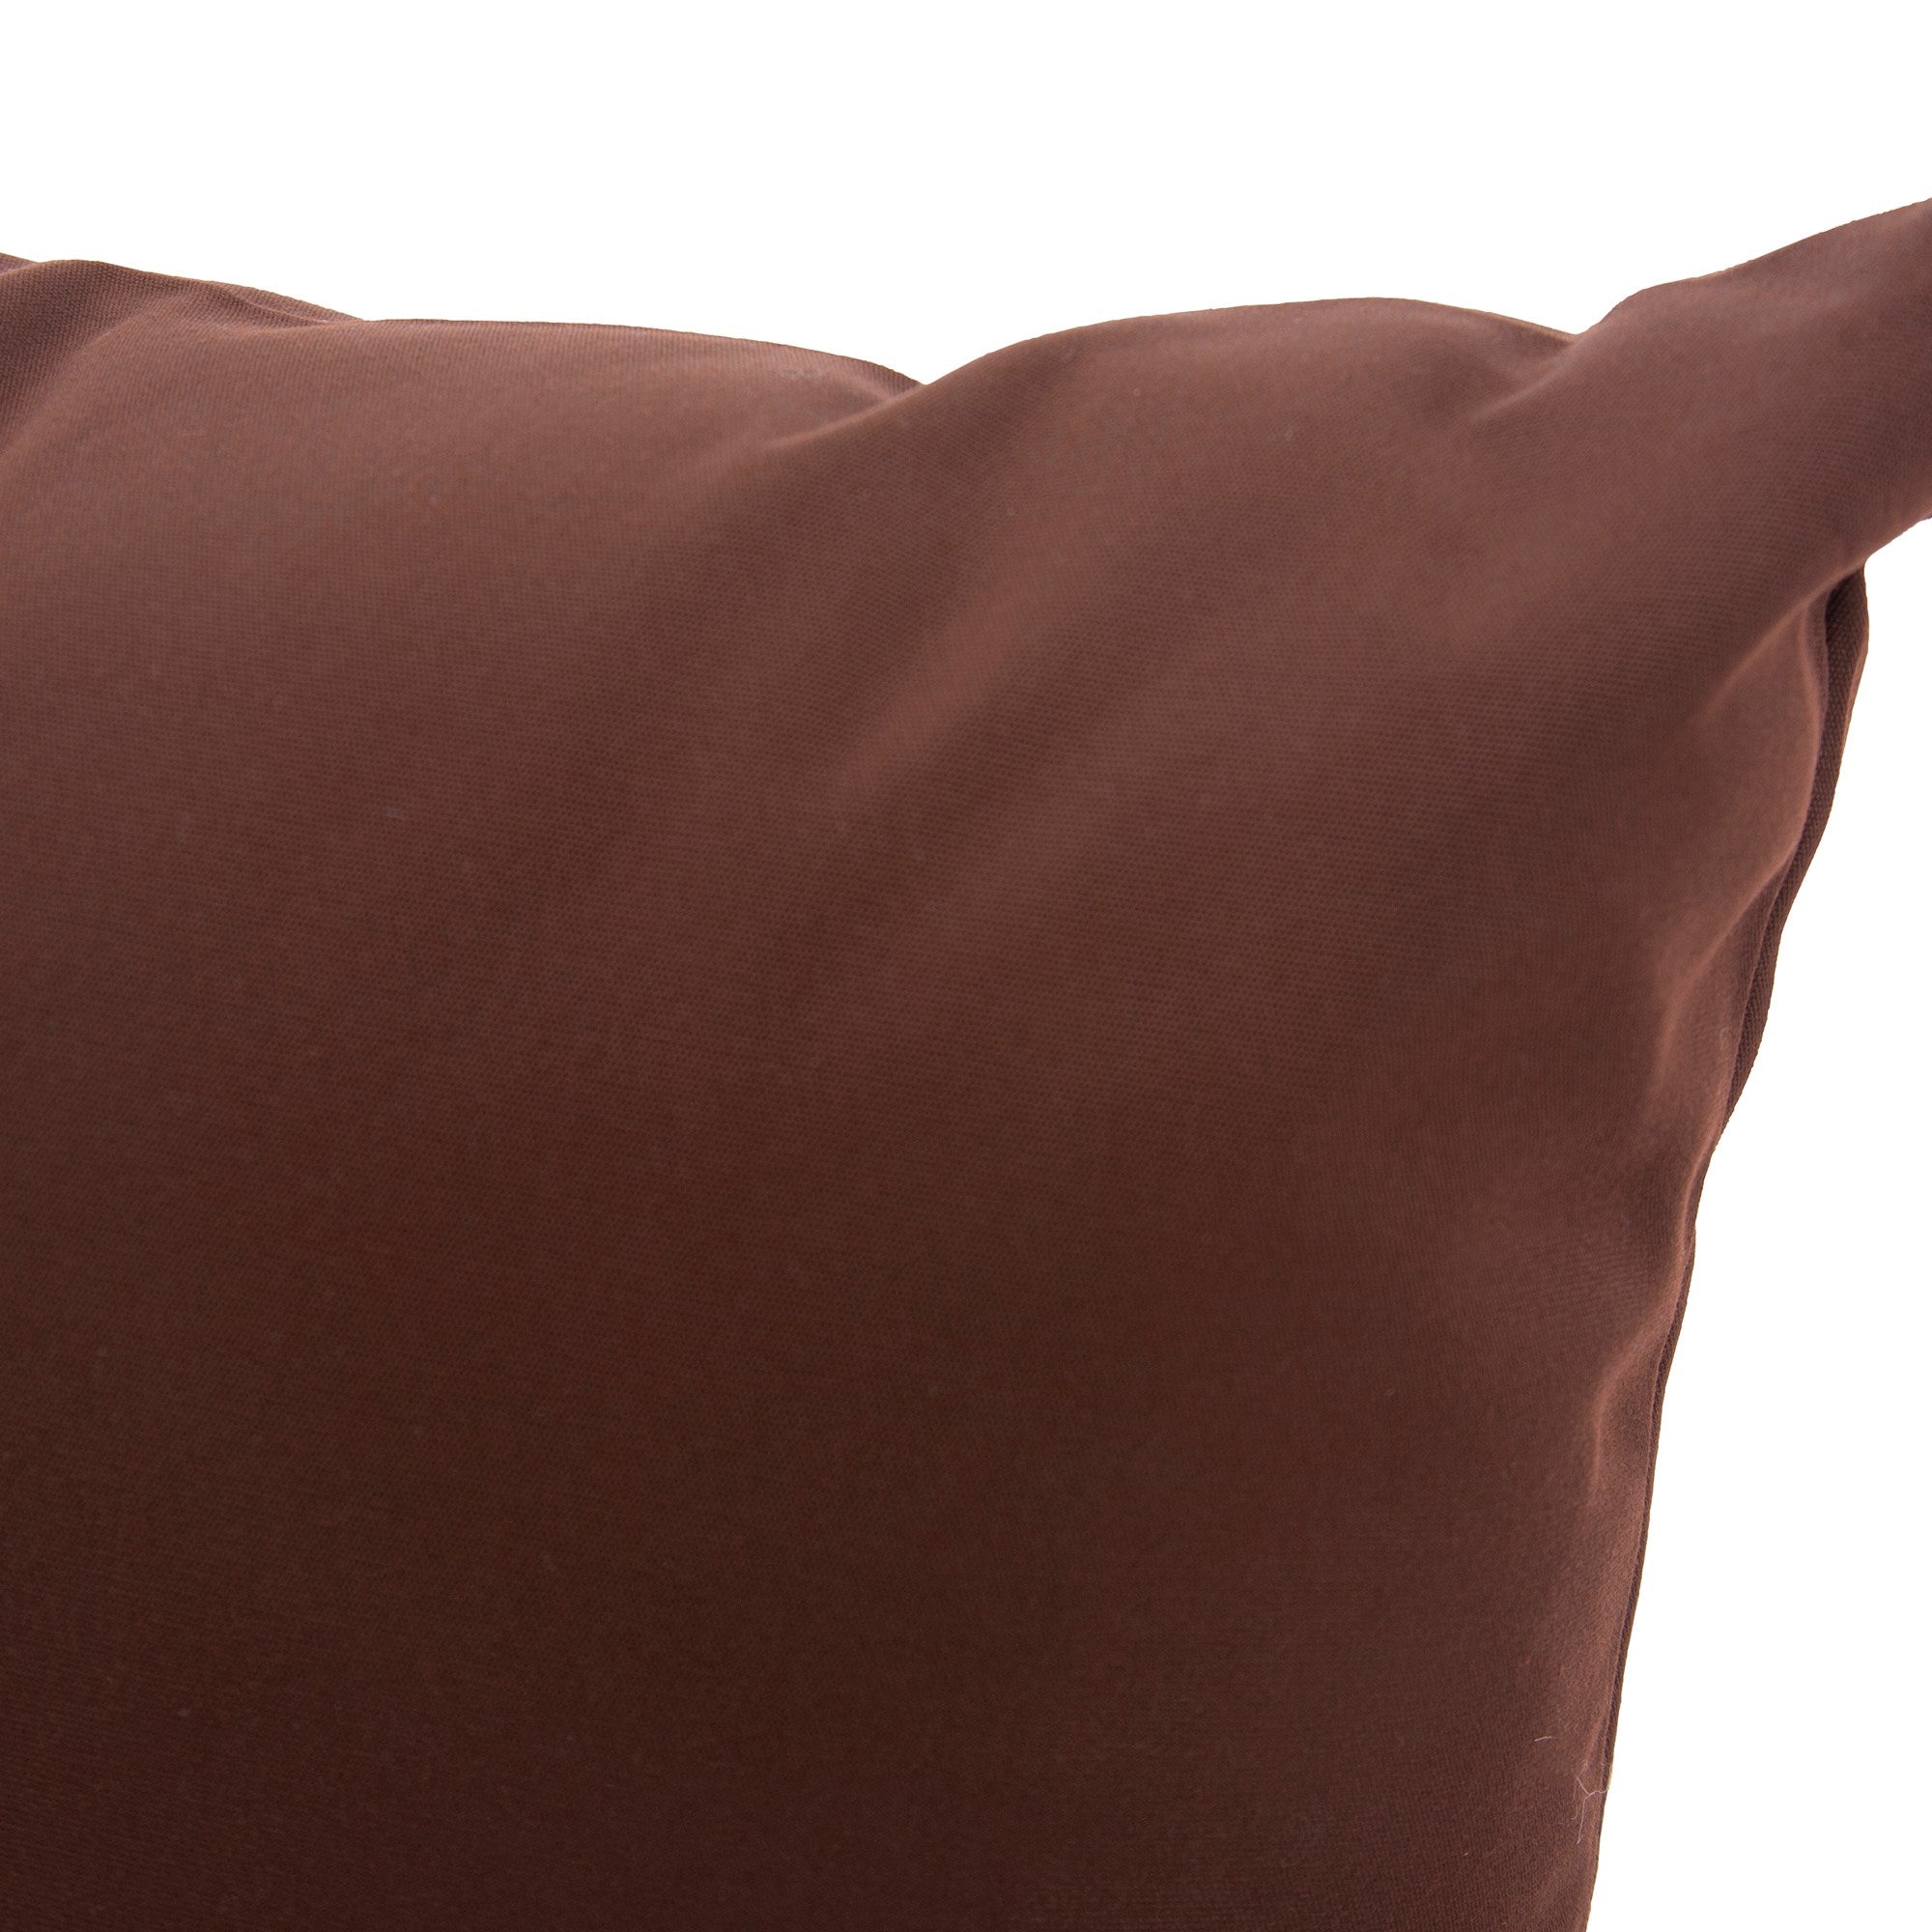 Seascape Chocolate Kidney Pillow- 11" x 22"